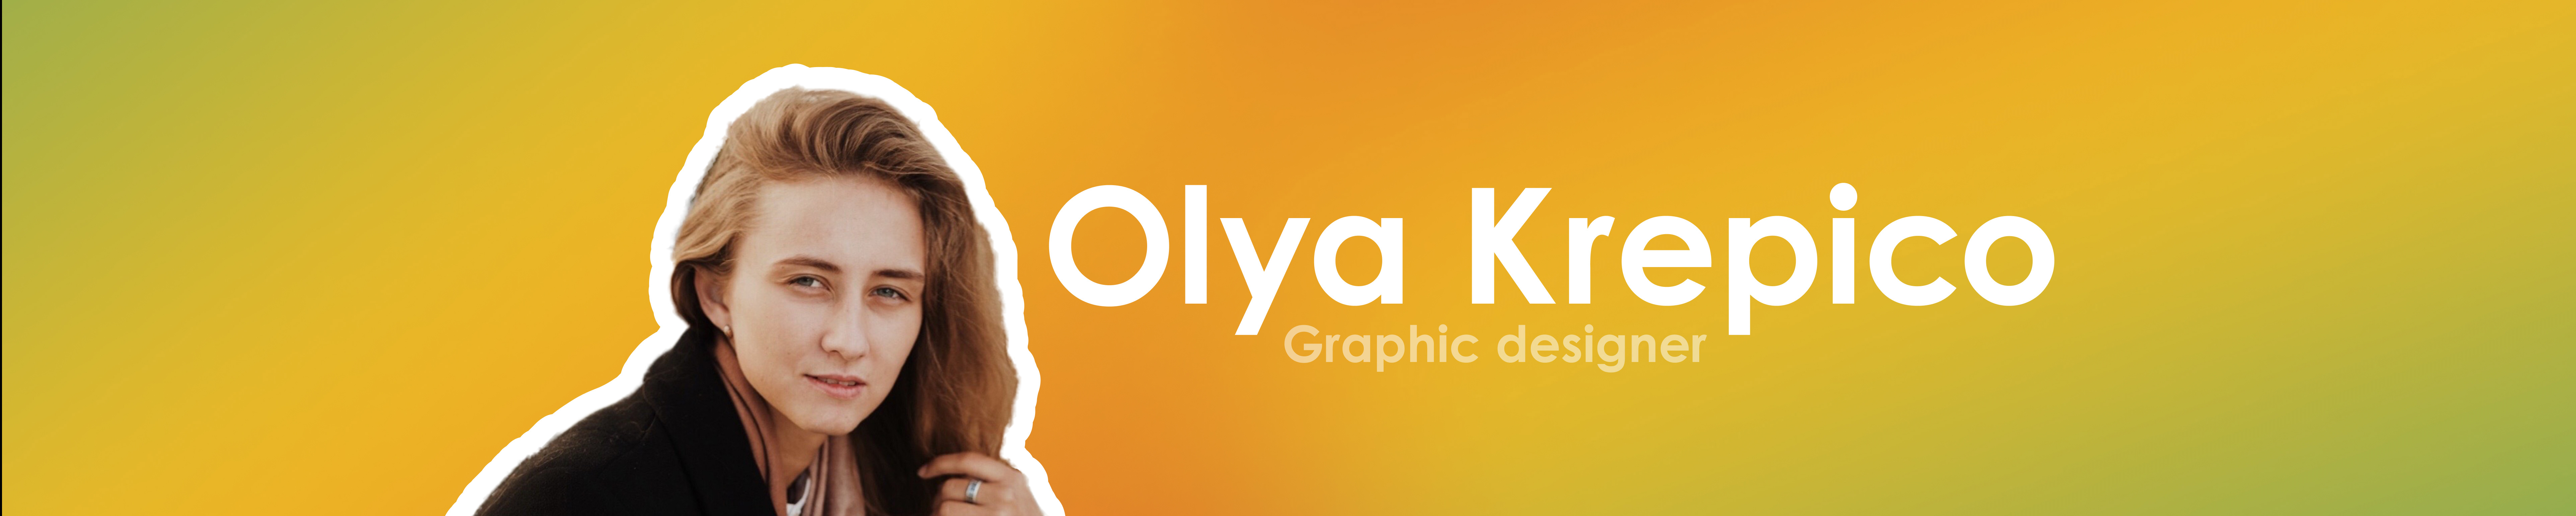 Olya Krepico's profile banner